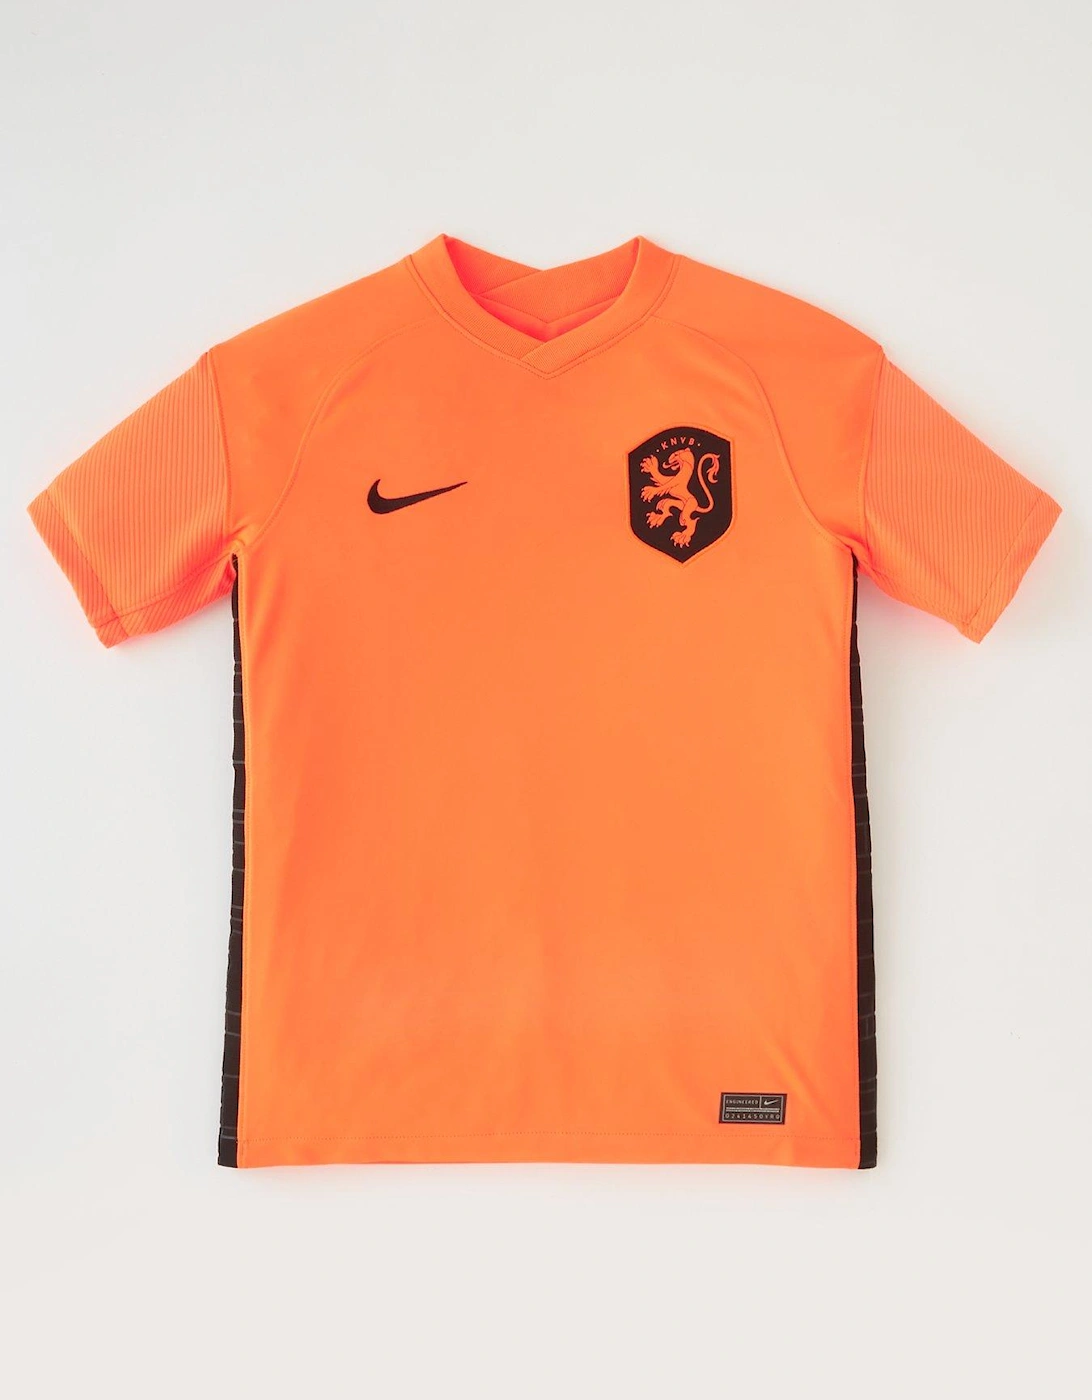 Netherlands KNVB Youth 22/23 Stadium Home Short Sleeve Jersey - Orange, 3 of 2